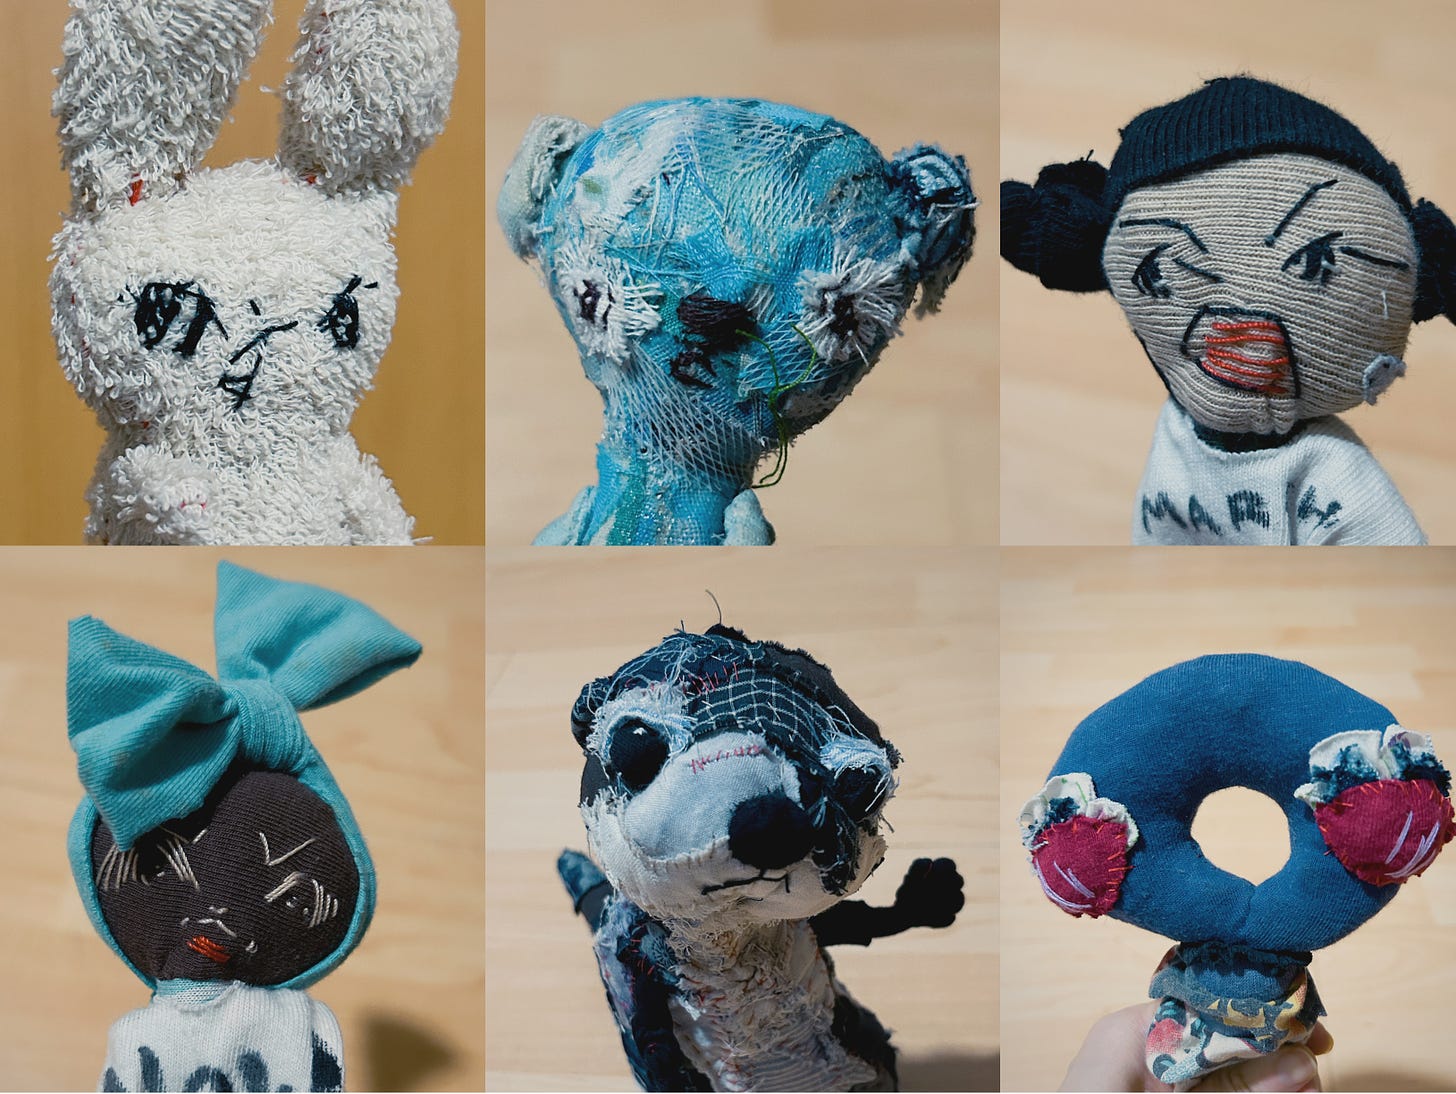 Noisybeak soft sculptures of a rabbit a bear, an otter, outer space creature, and 2 humans.